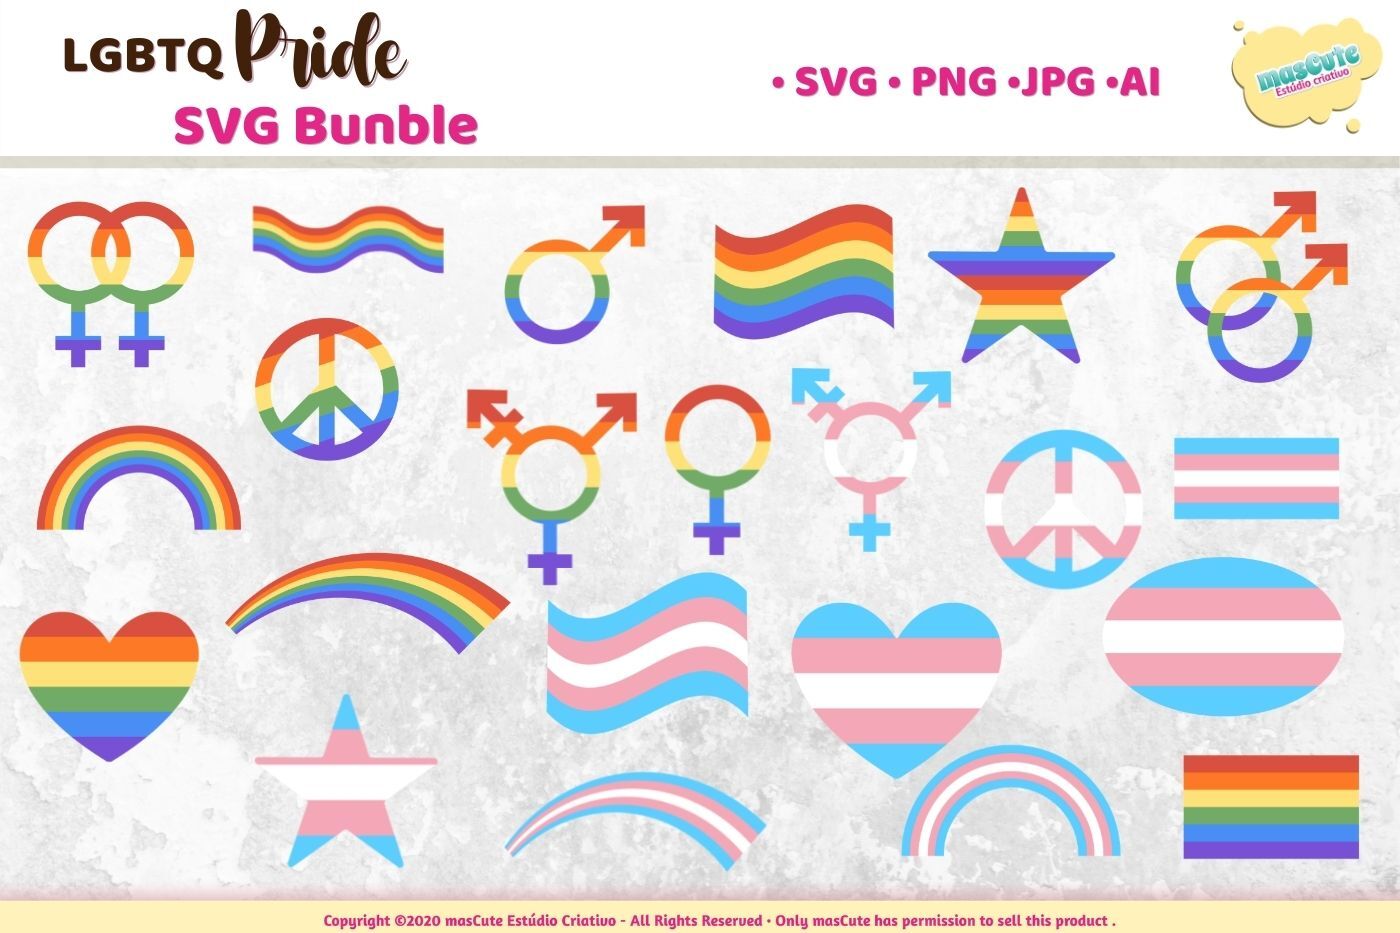 LGBTQ Pride Rainbow SVG Bundle, gay pride stickers By mascuteestudio